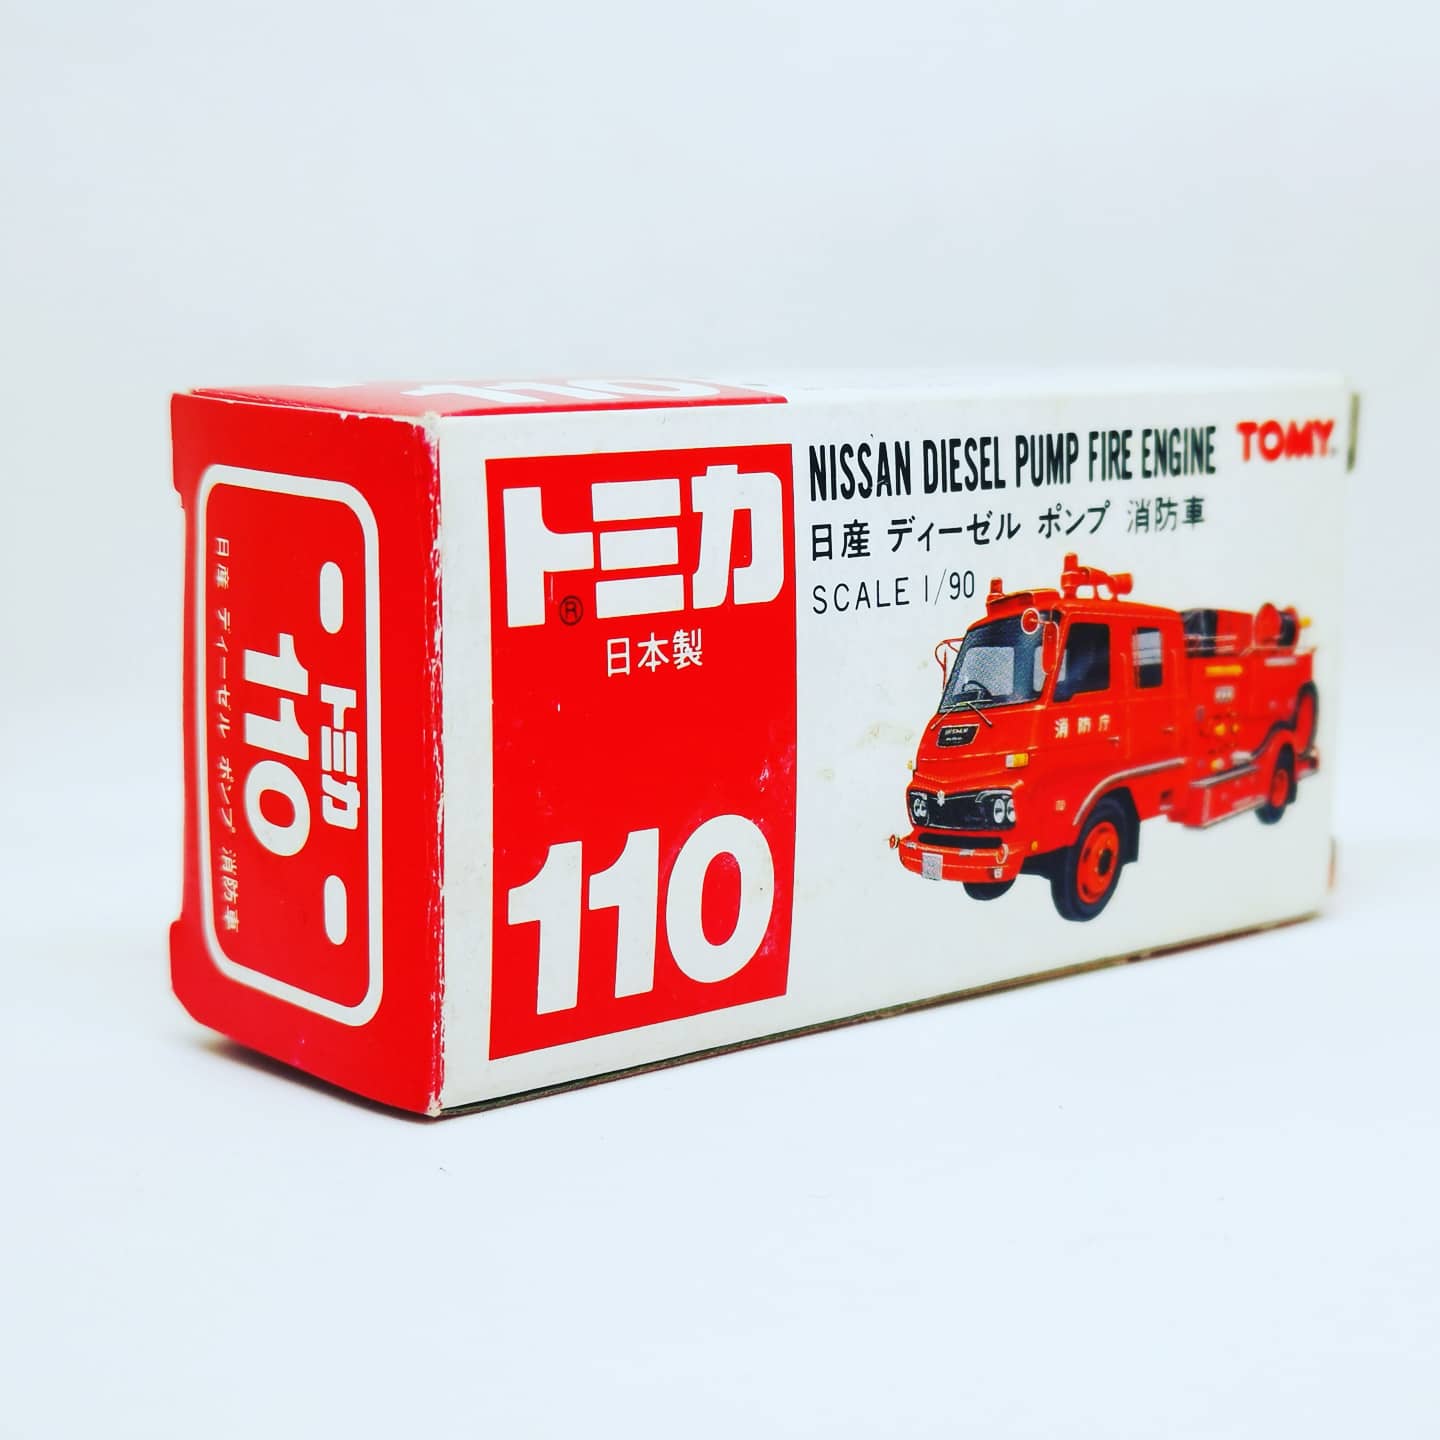 Tomica #110 Nissan Diesel Pump Fire Engine Made in Japan